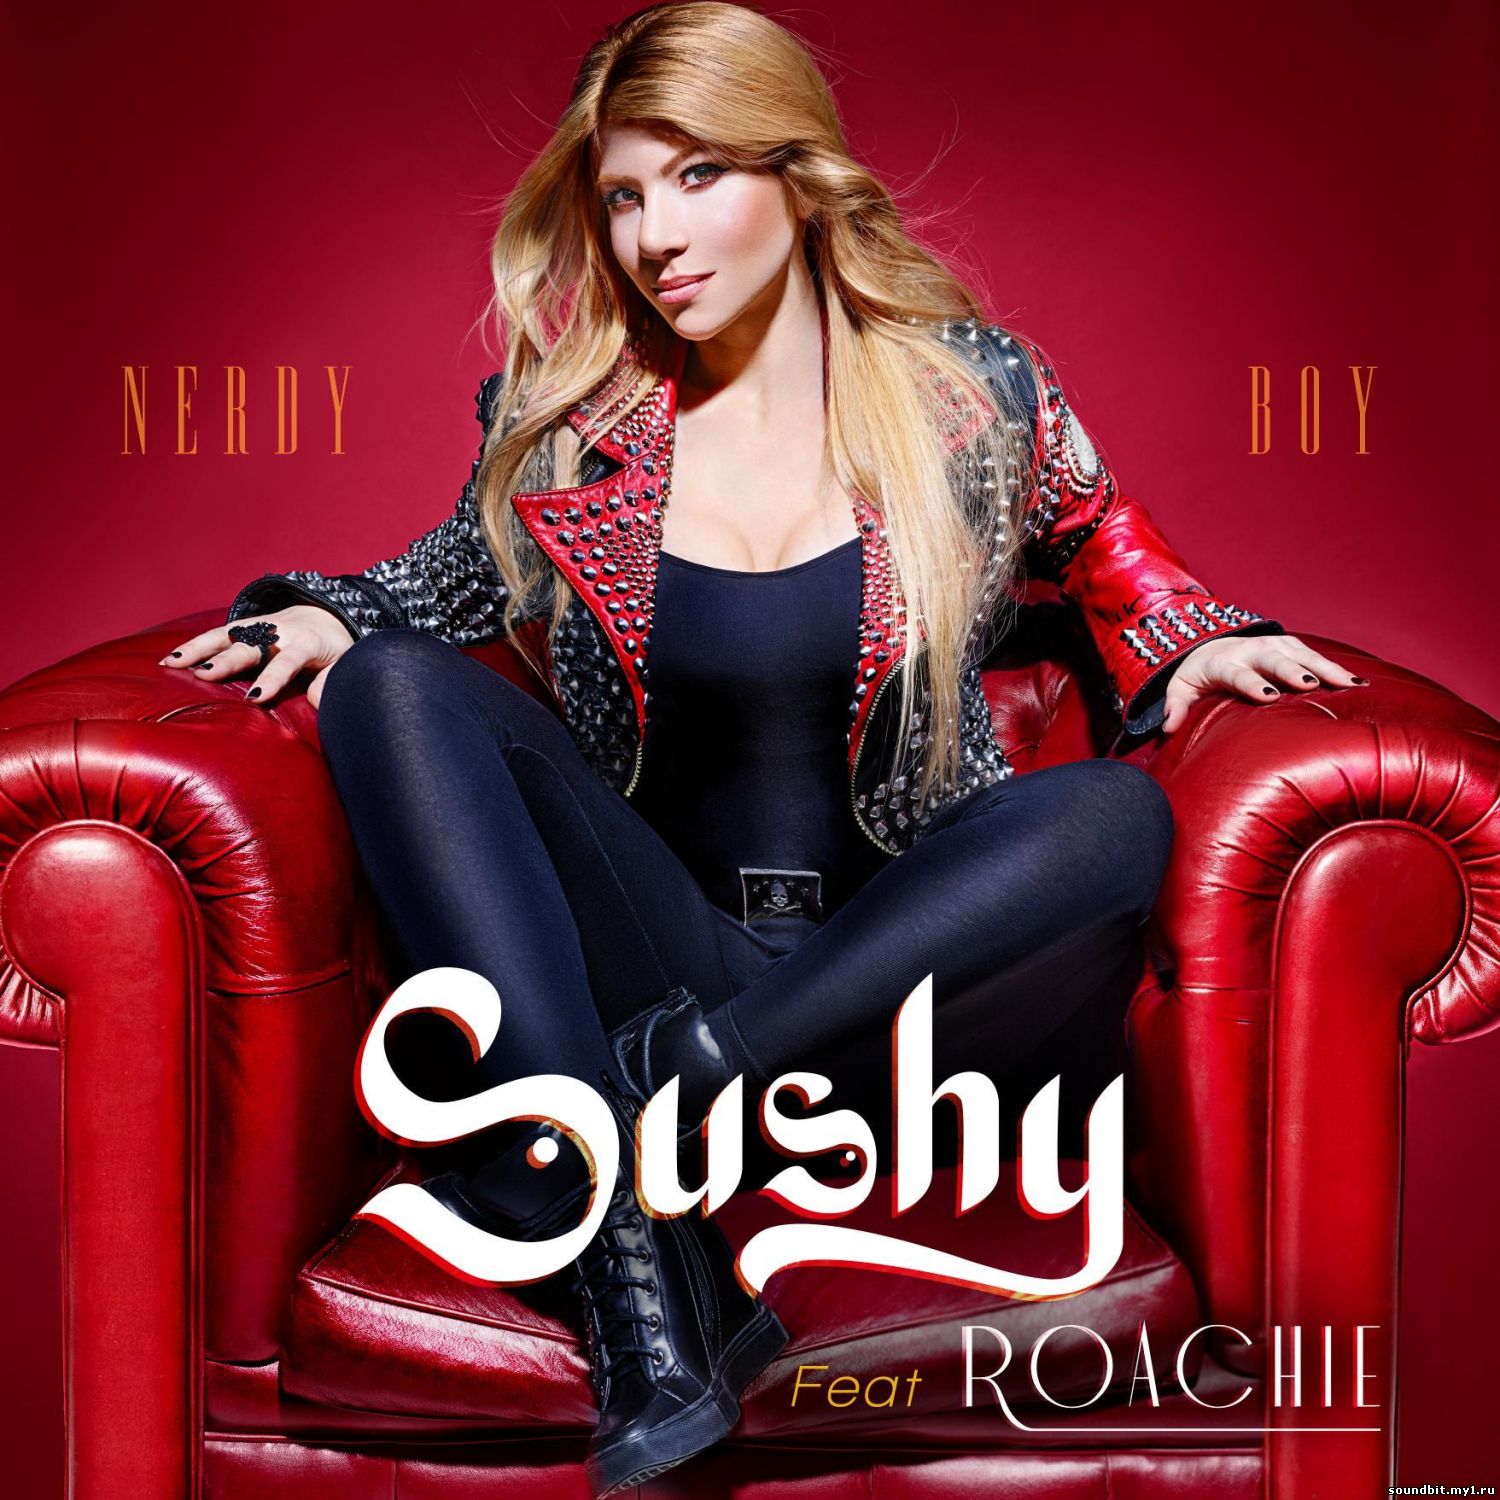  Sushy feat. Roachie-Nerdy Boy